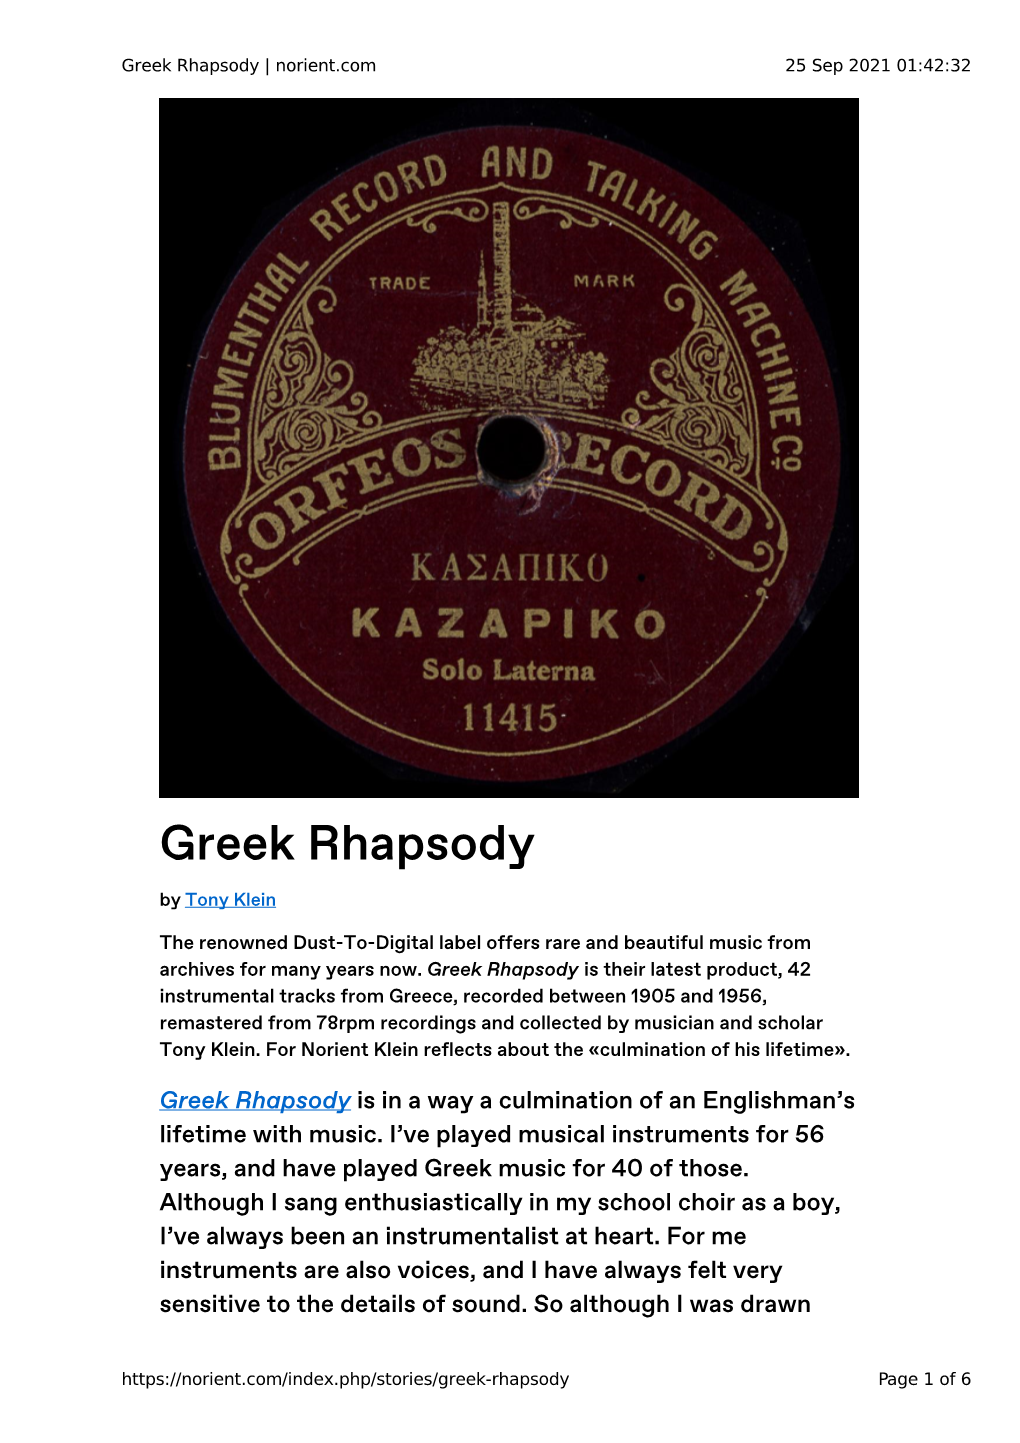 Greek Rhapsody | Norient.Com 25 Sep 2021 01:42:32